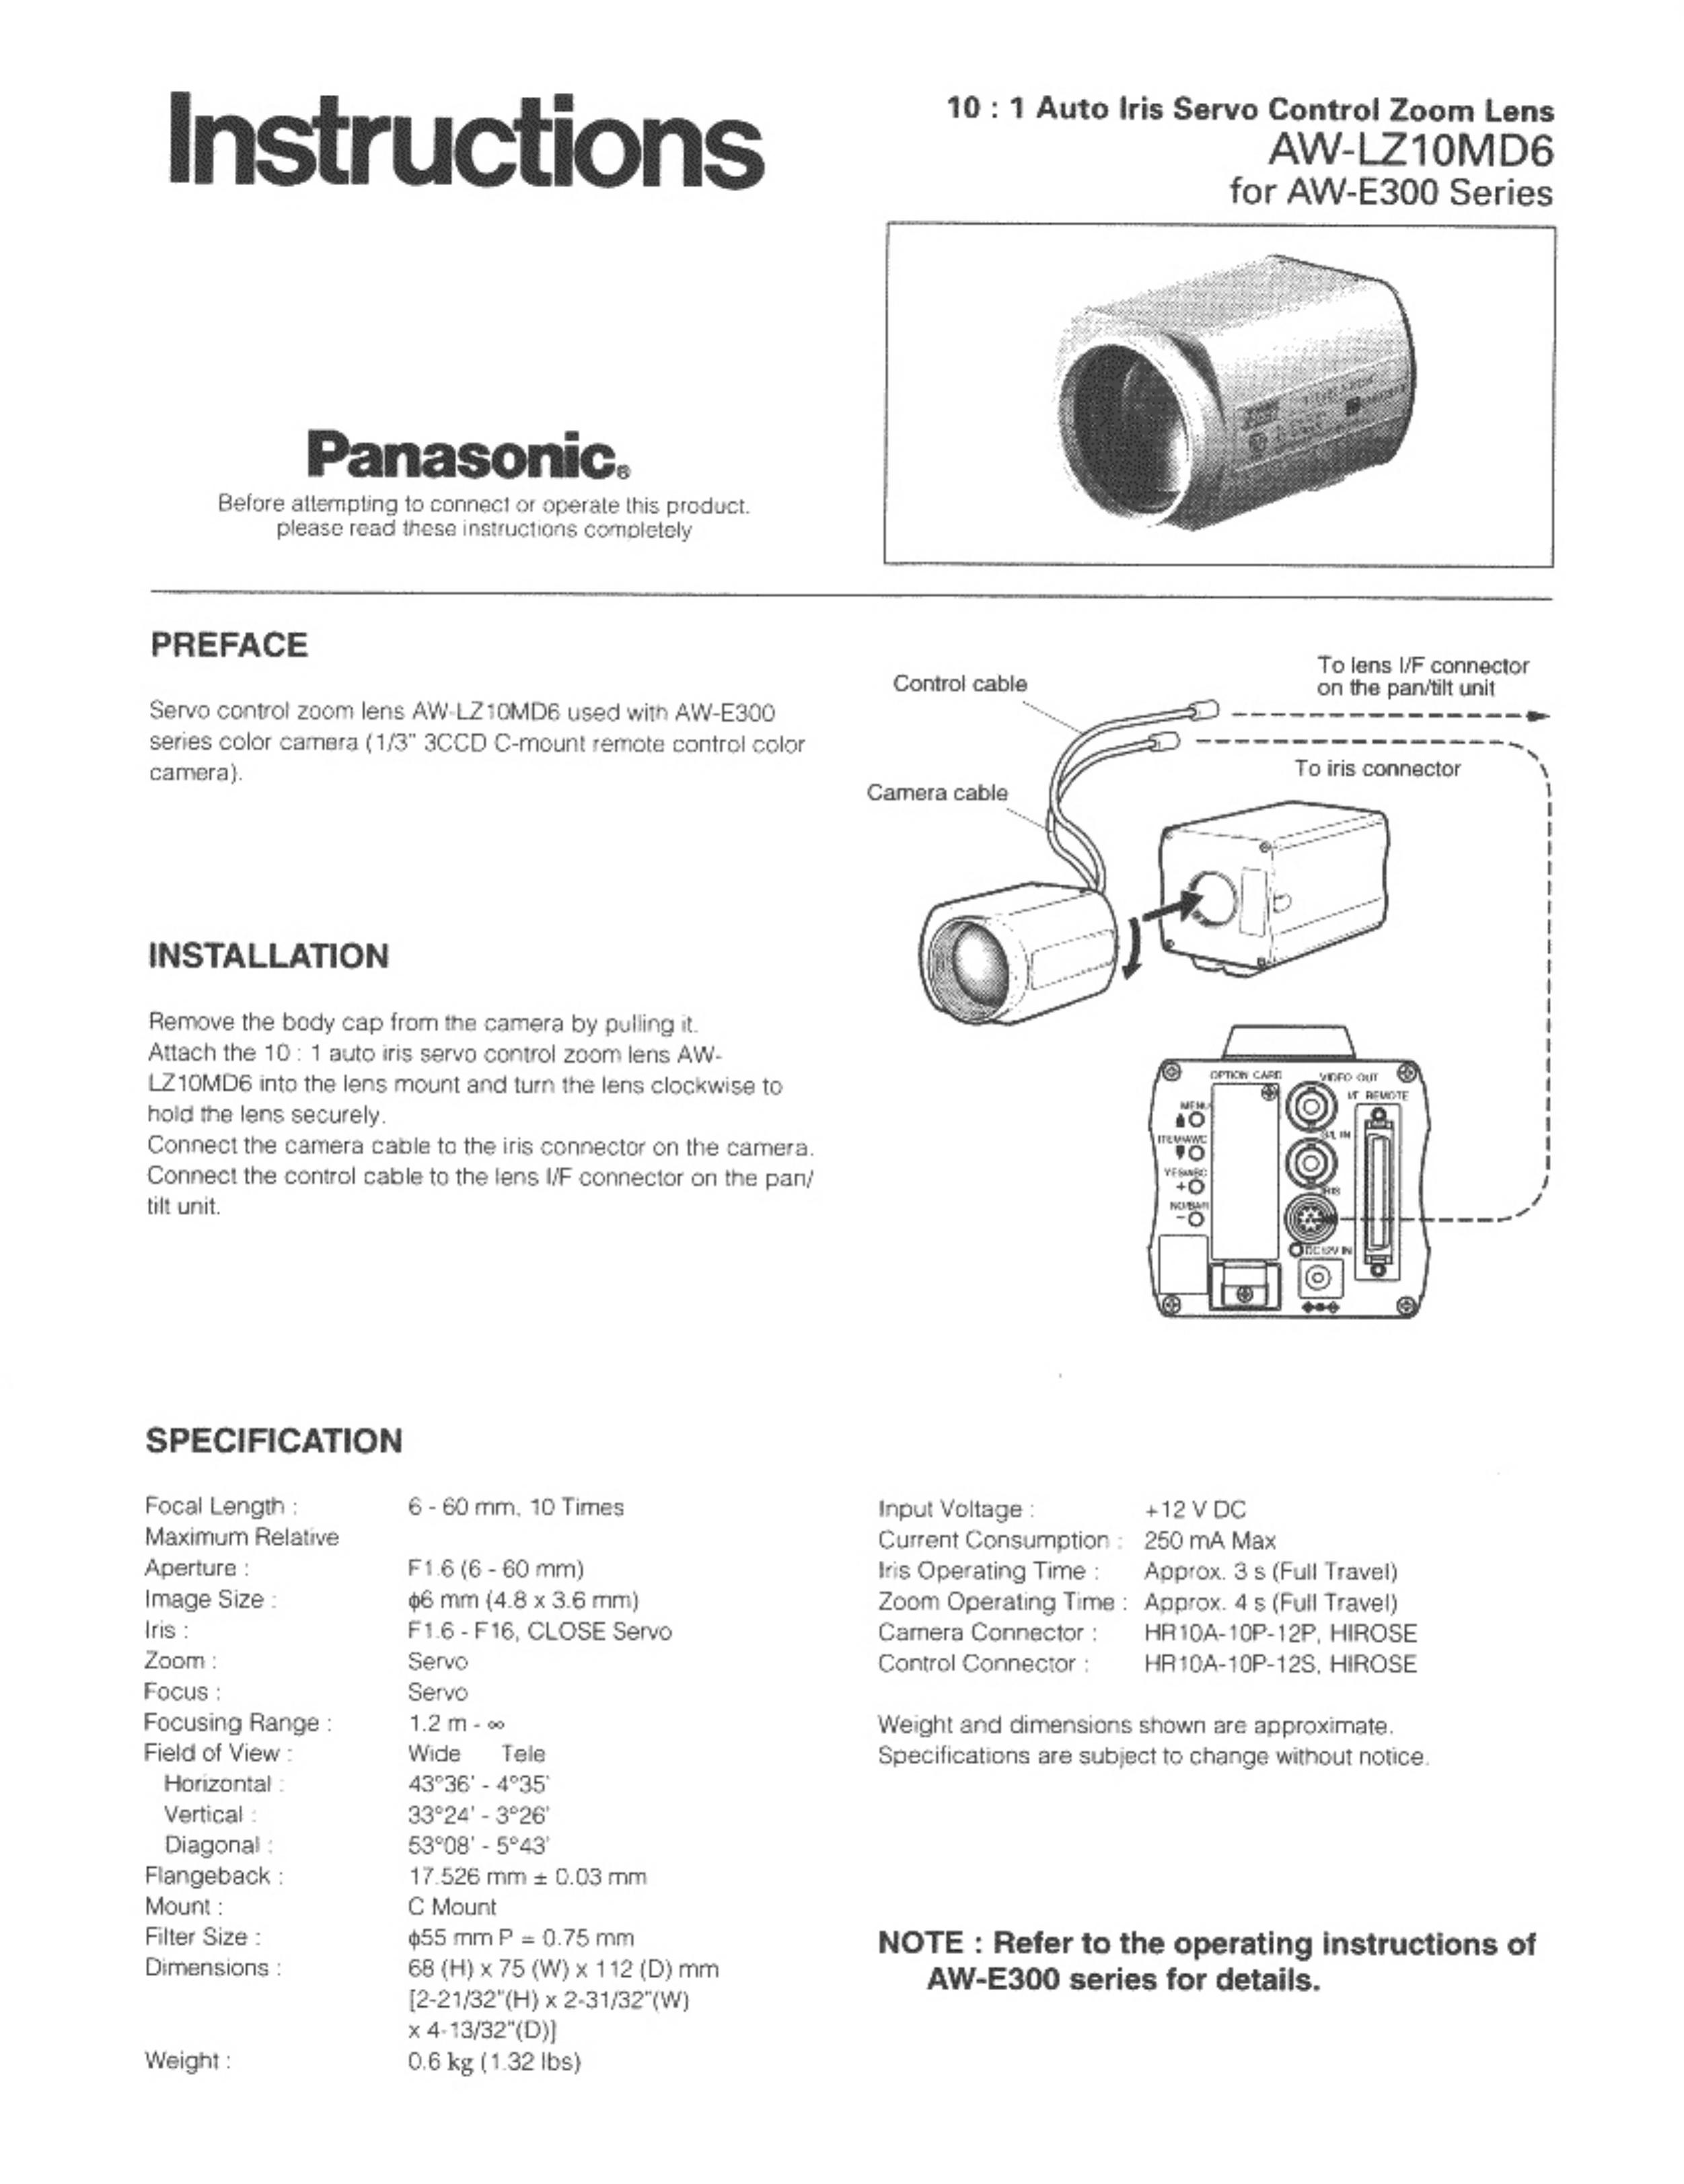 Panasonic AW-LZ10MD6 for AW-E300 Series Camera Lens User Manual